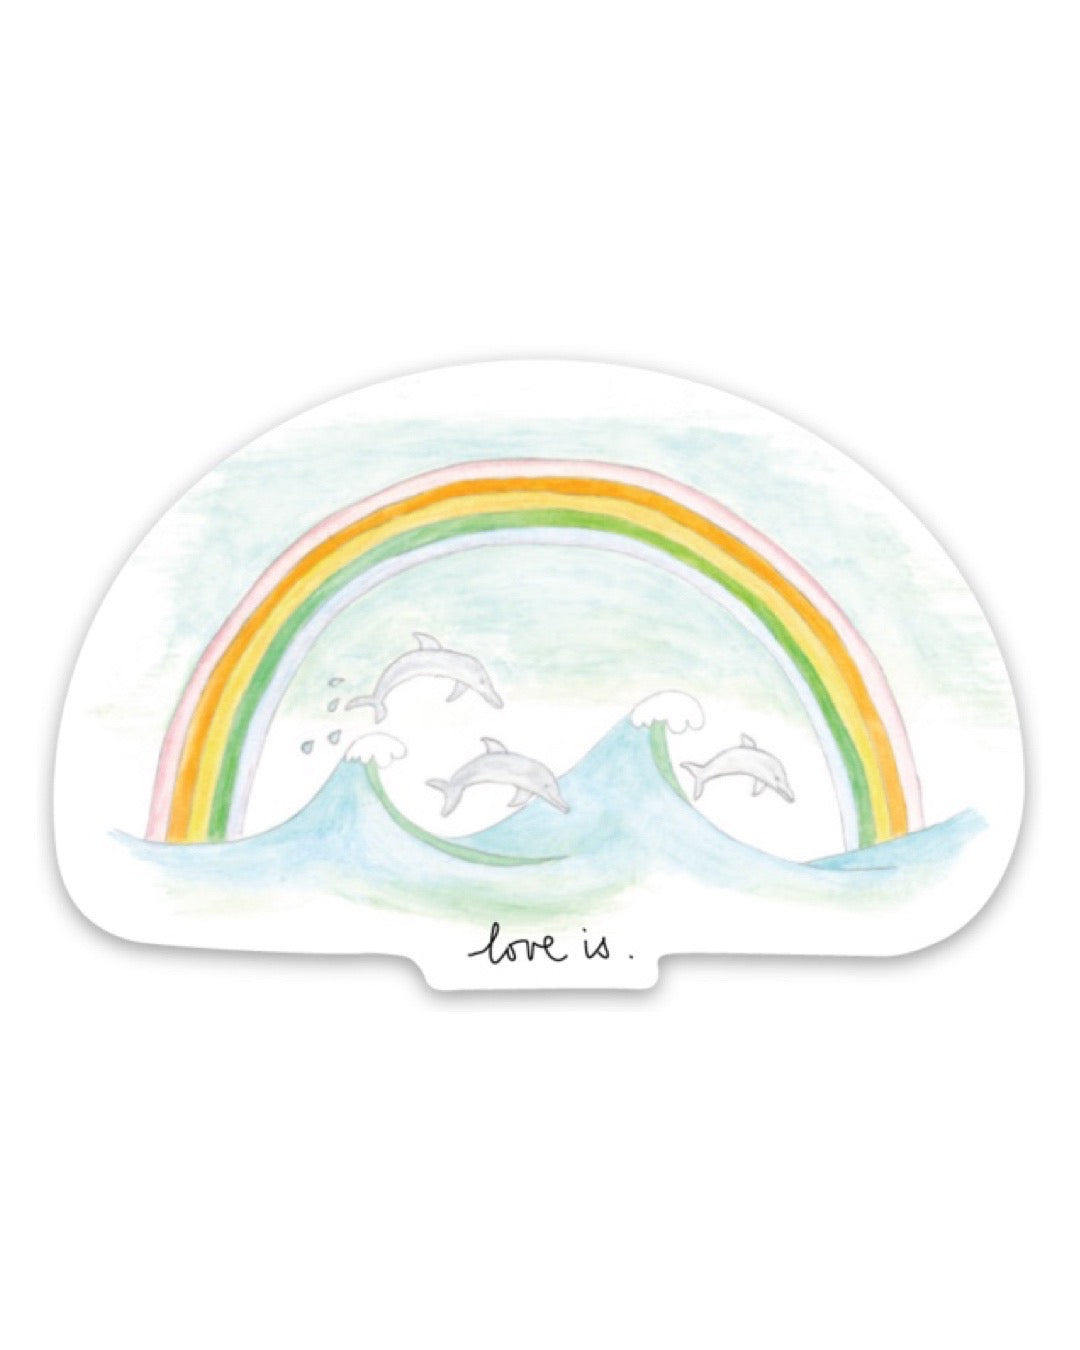 love is a rainbow ♡ sticker